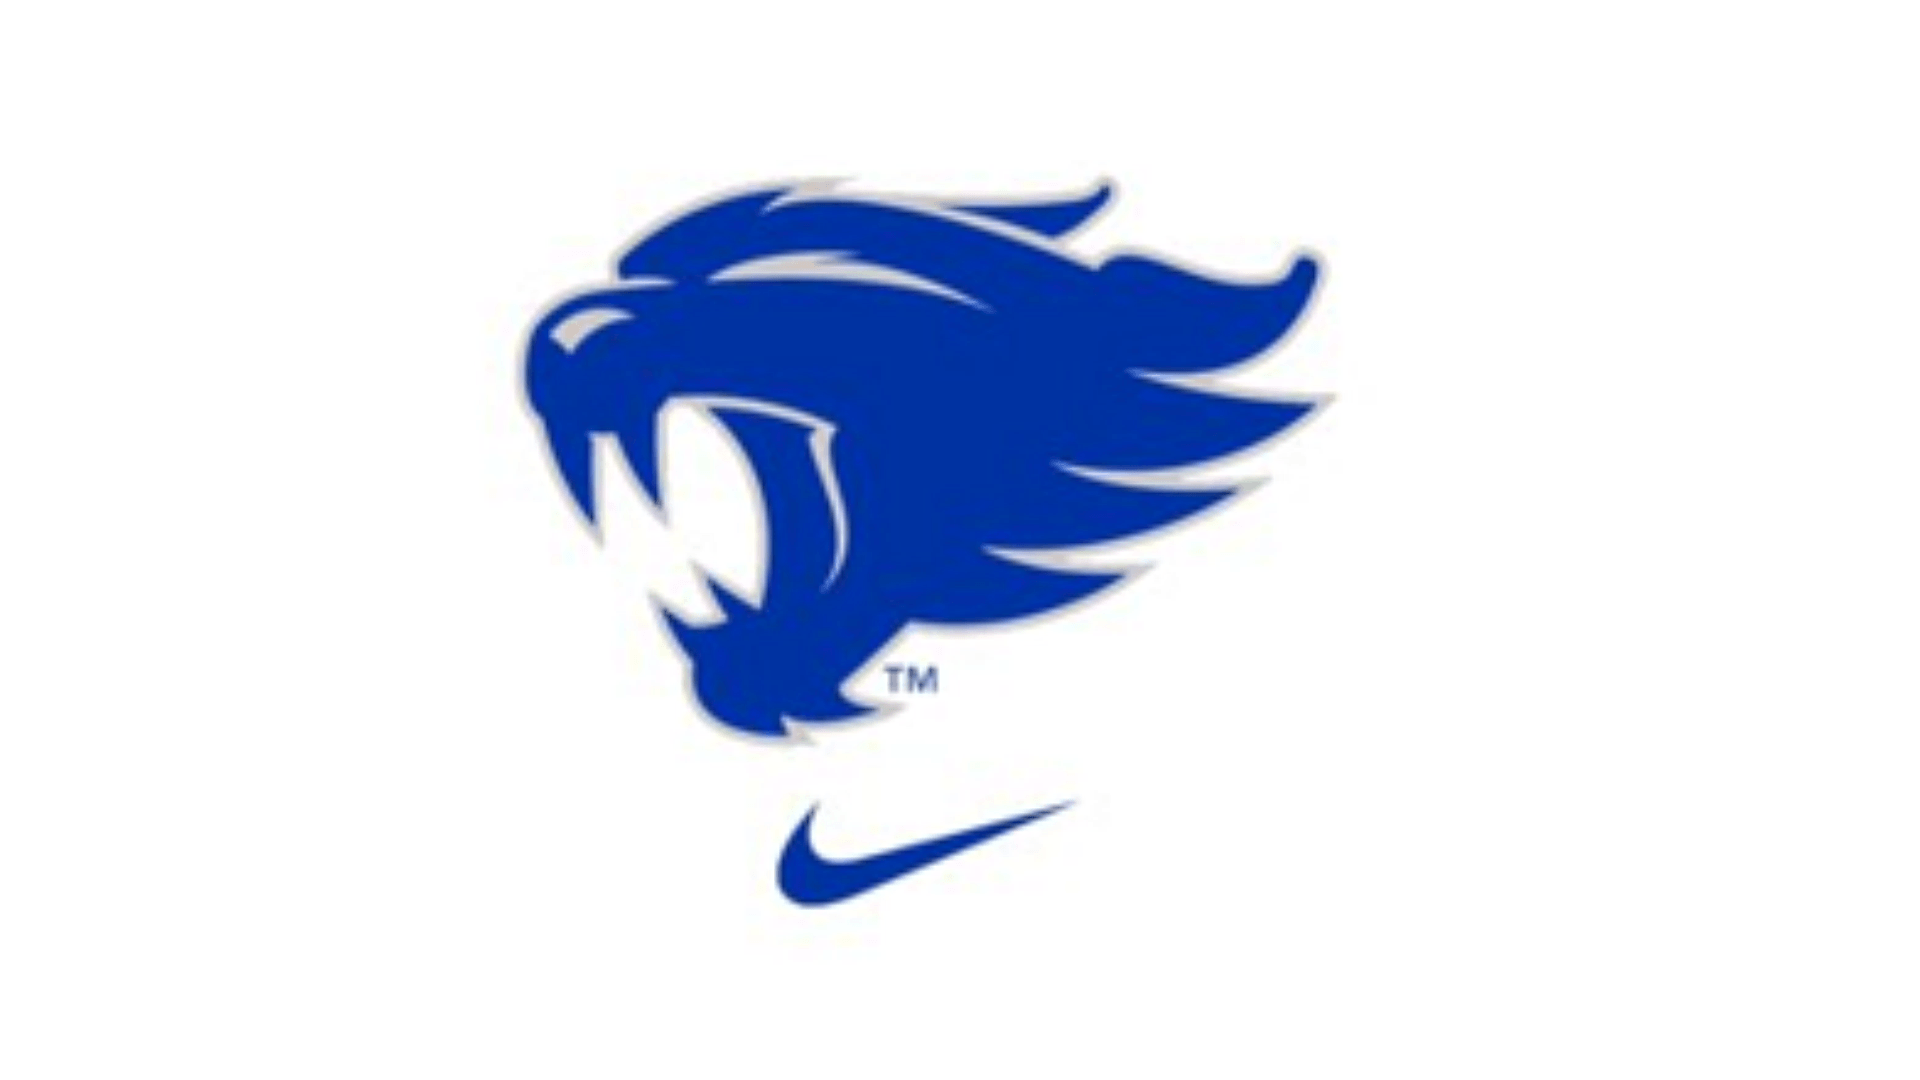 Wildcats Logo - Kentucky makes waves with new Wildcat logo